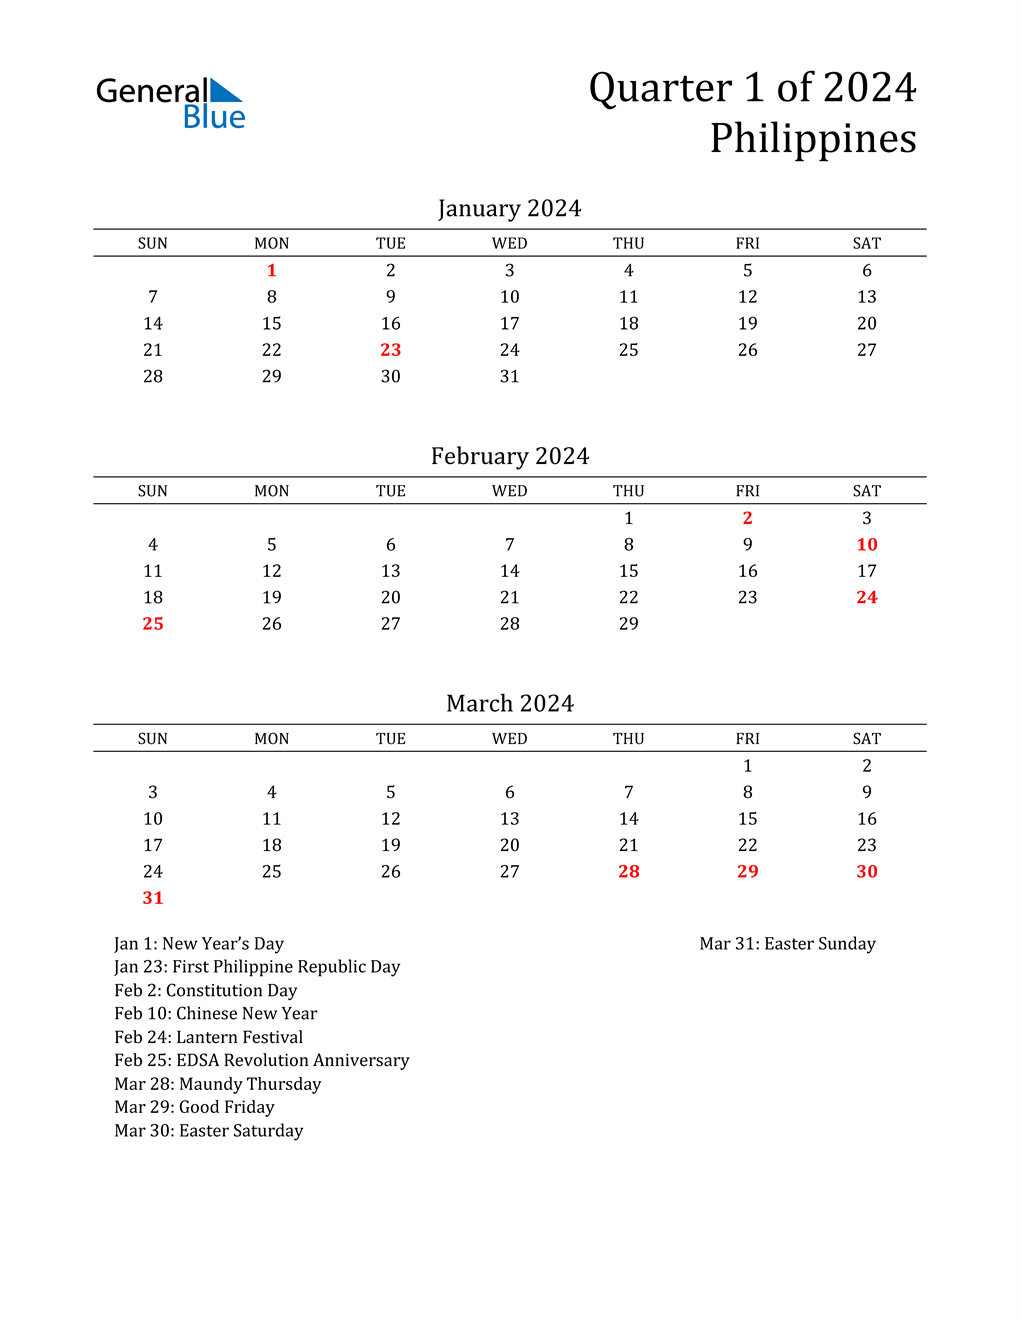 Q1 2024 Quarterly Calendar with Philippines Holidays